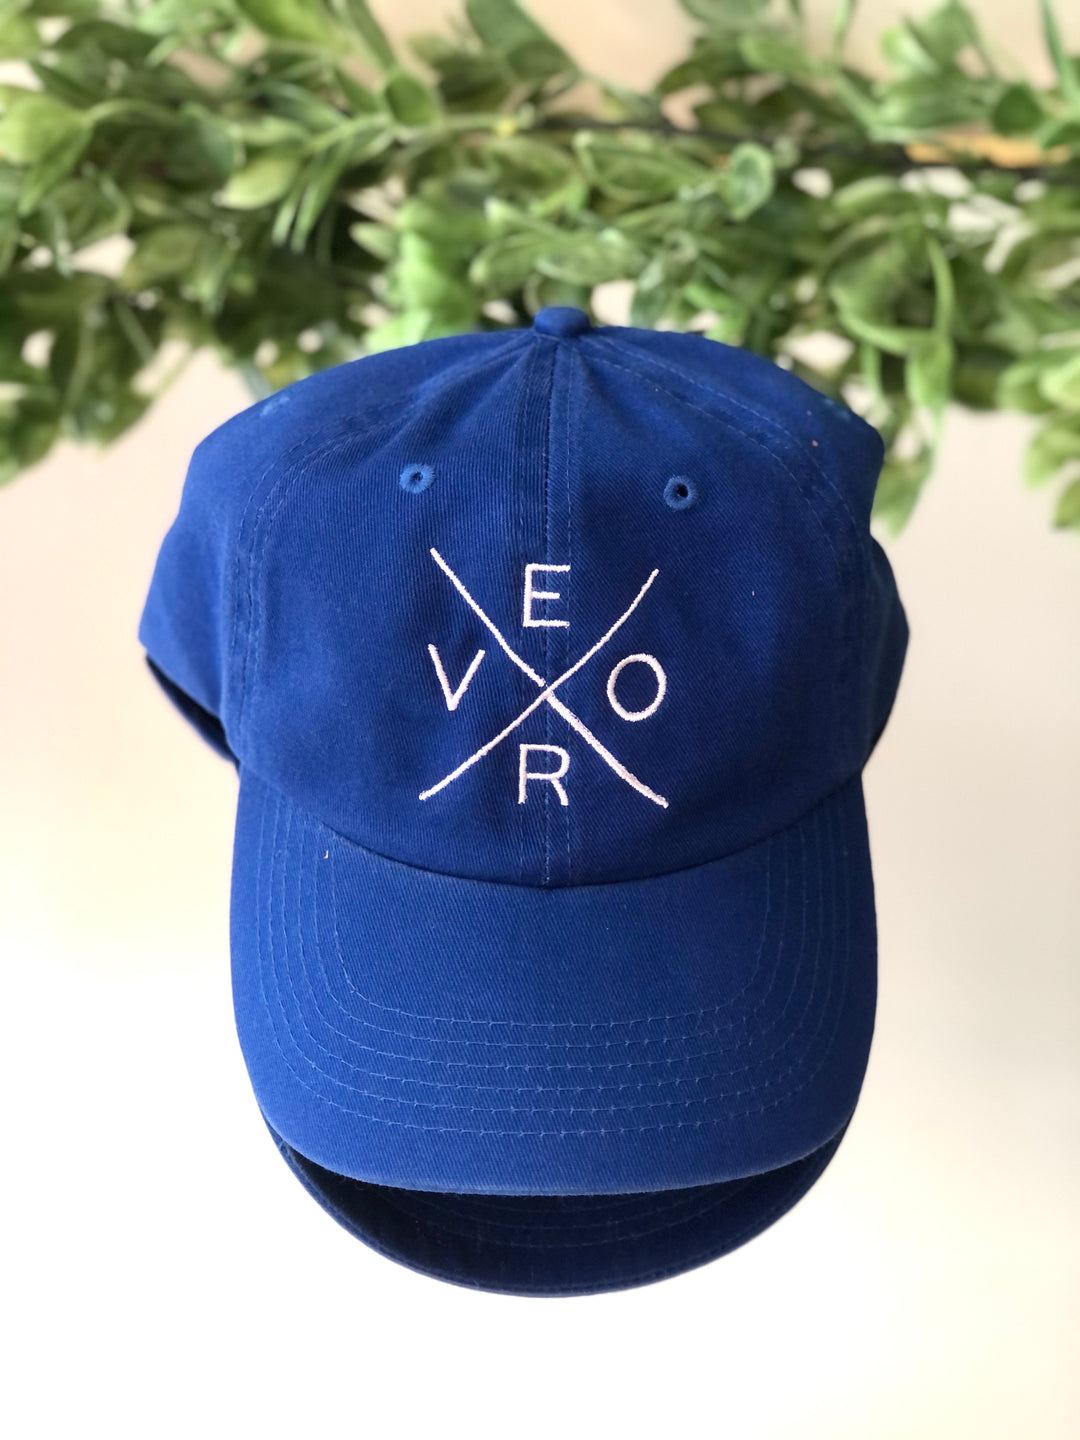 Vero Hat - Royal Blue & White